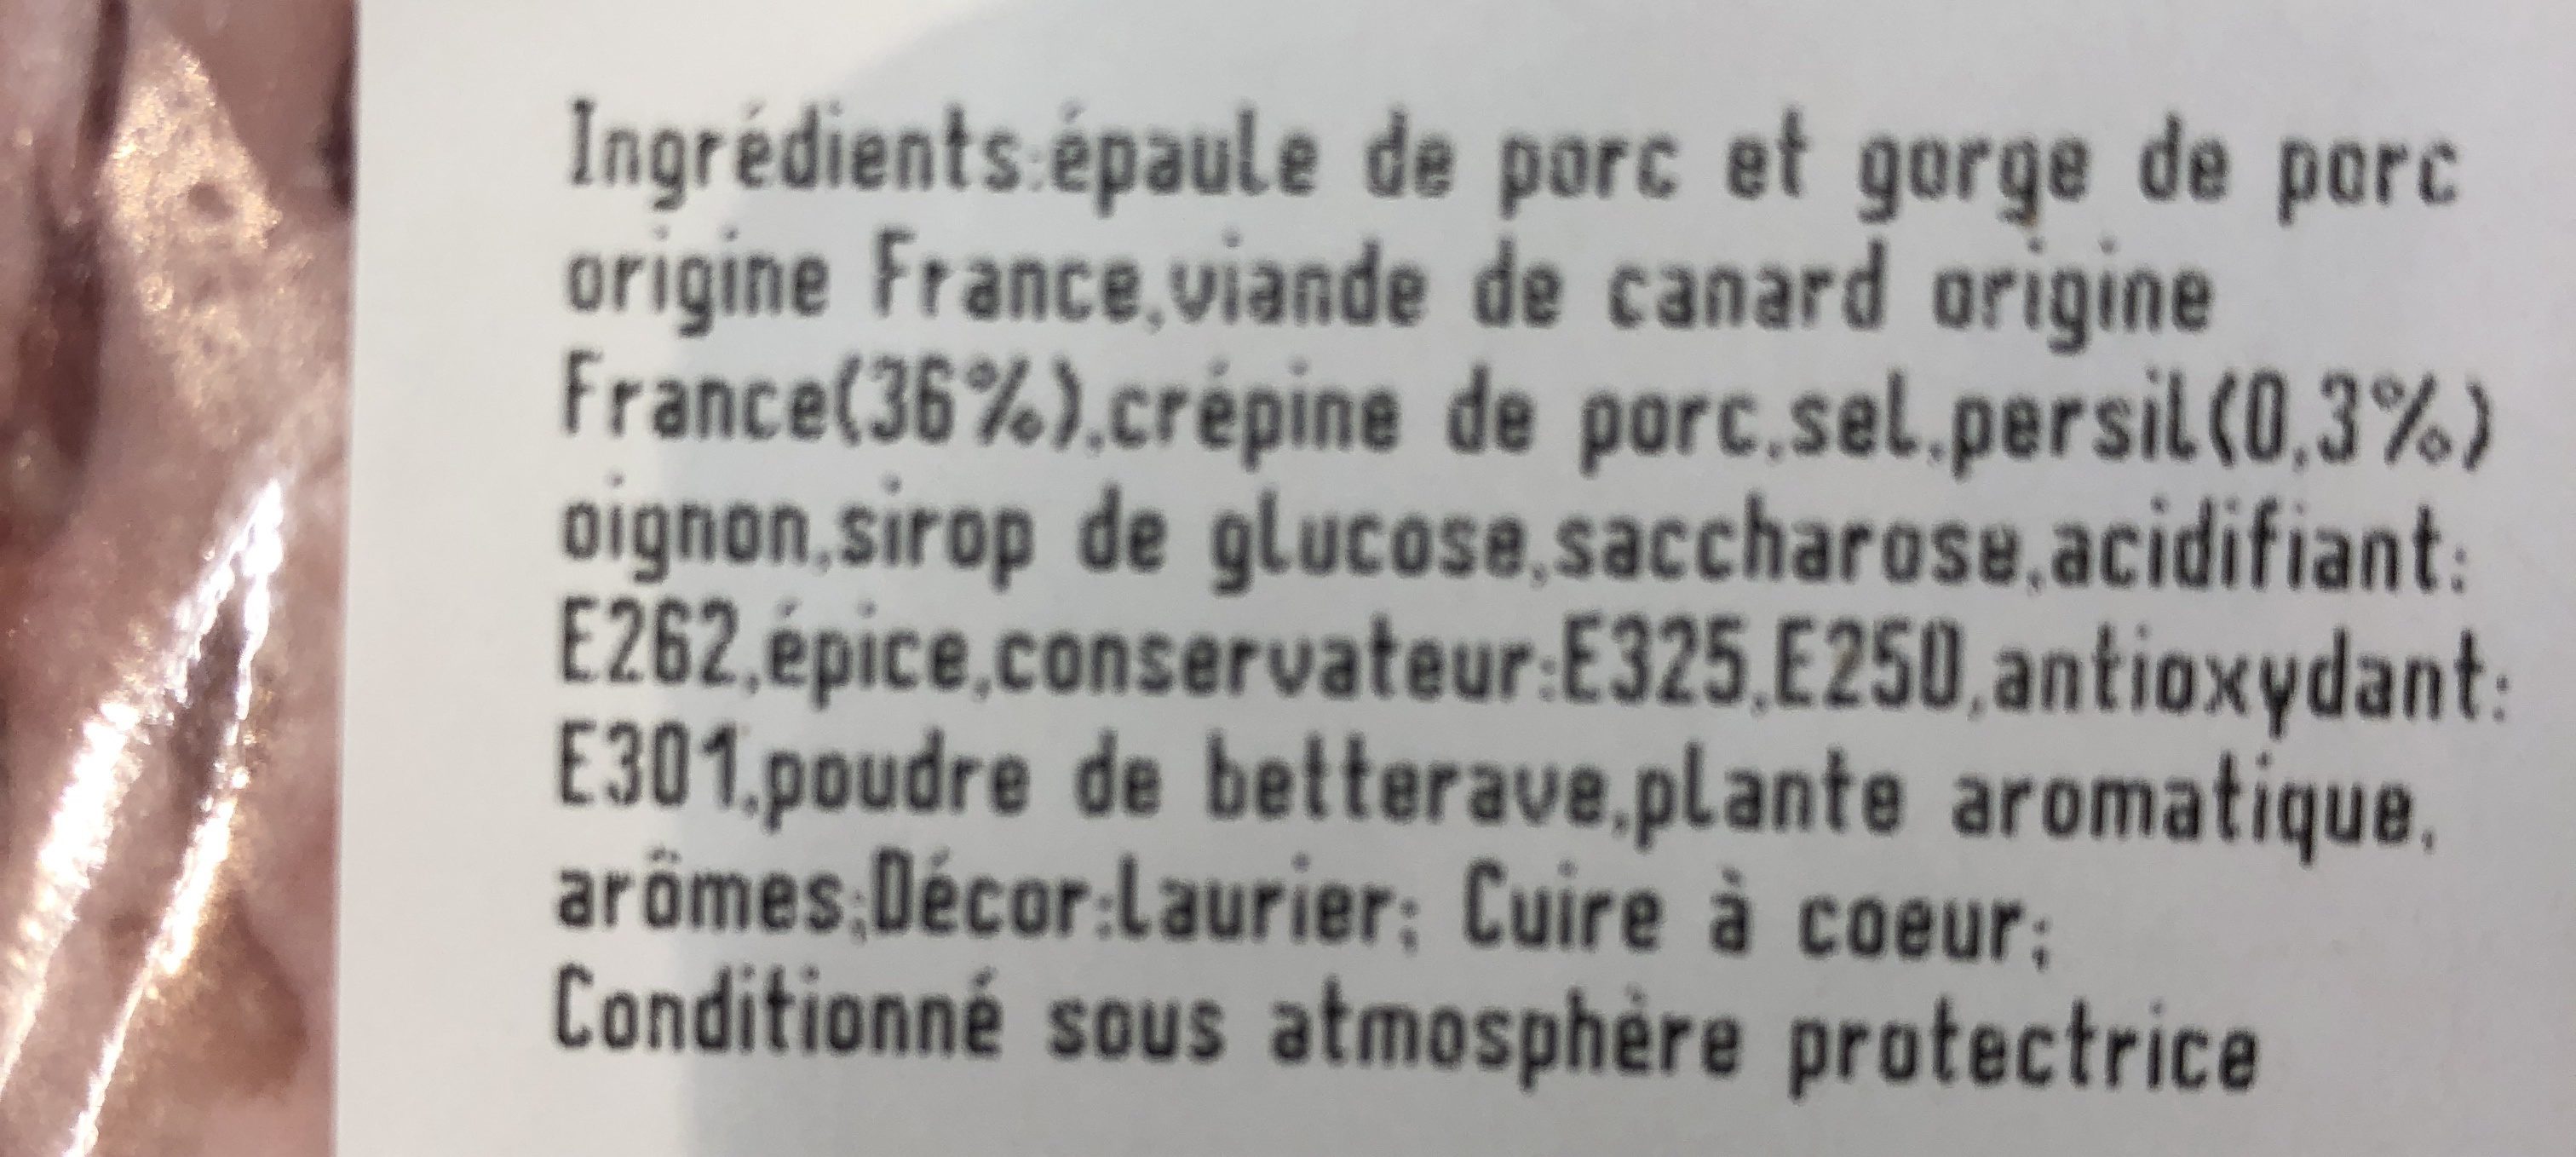 Crepinettes de canard - Ingredientes - fr